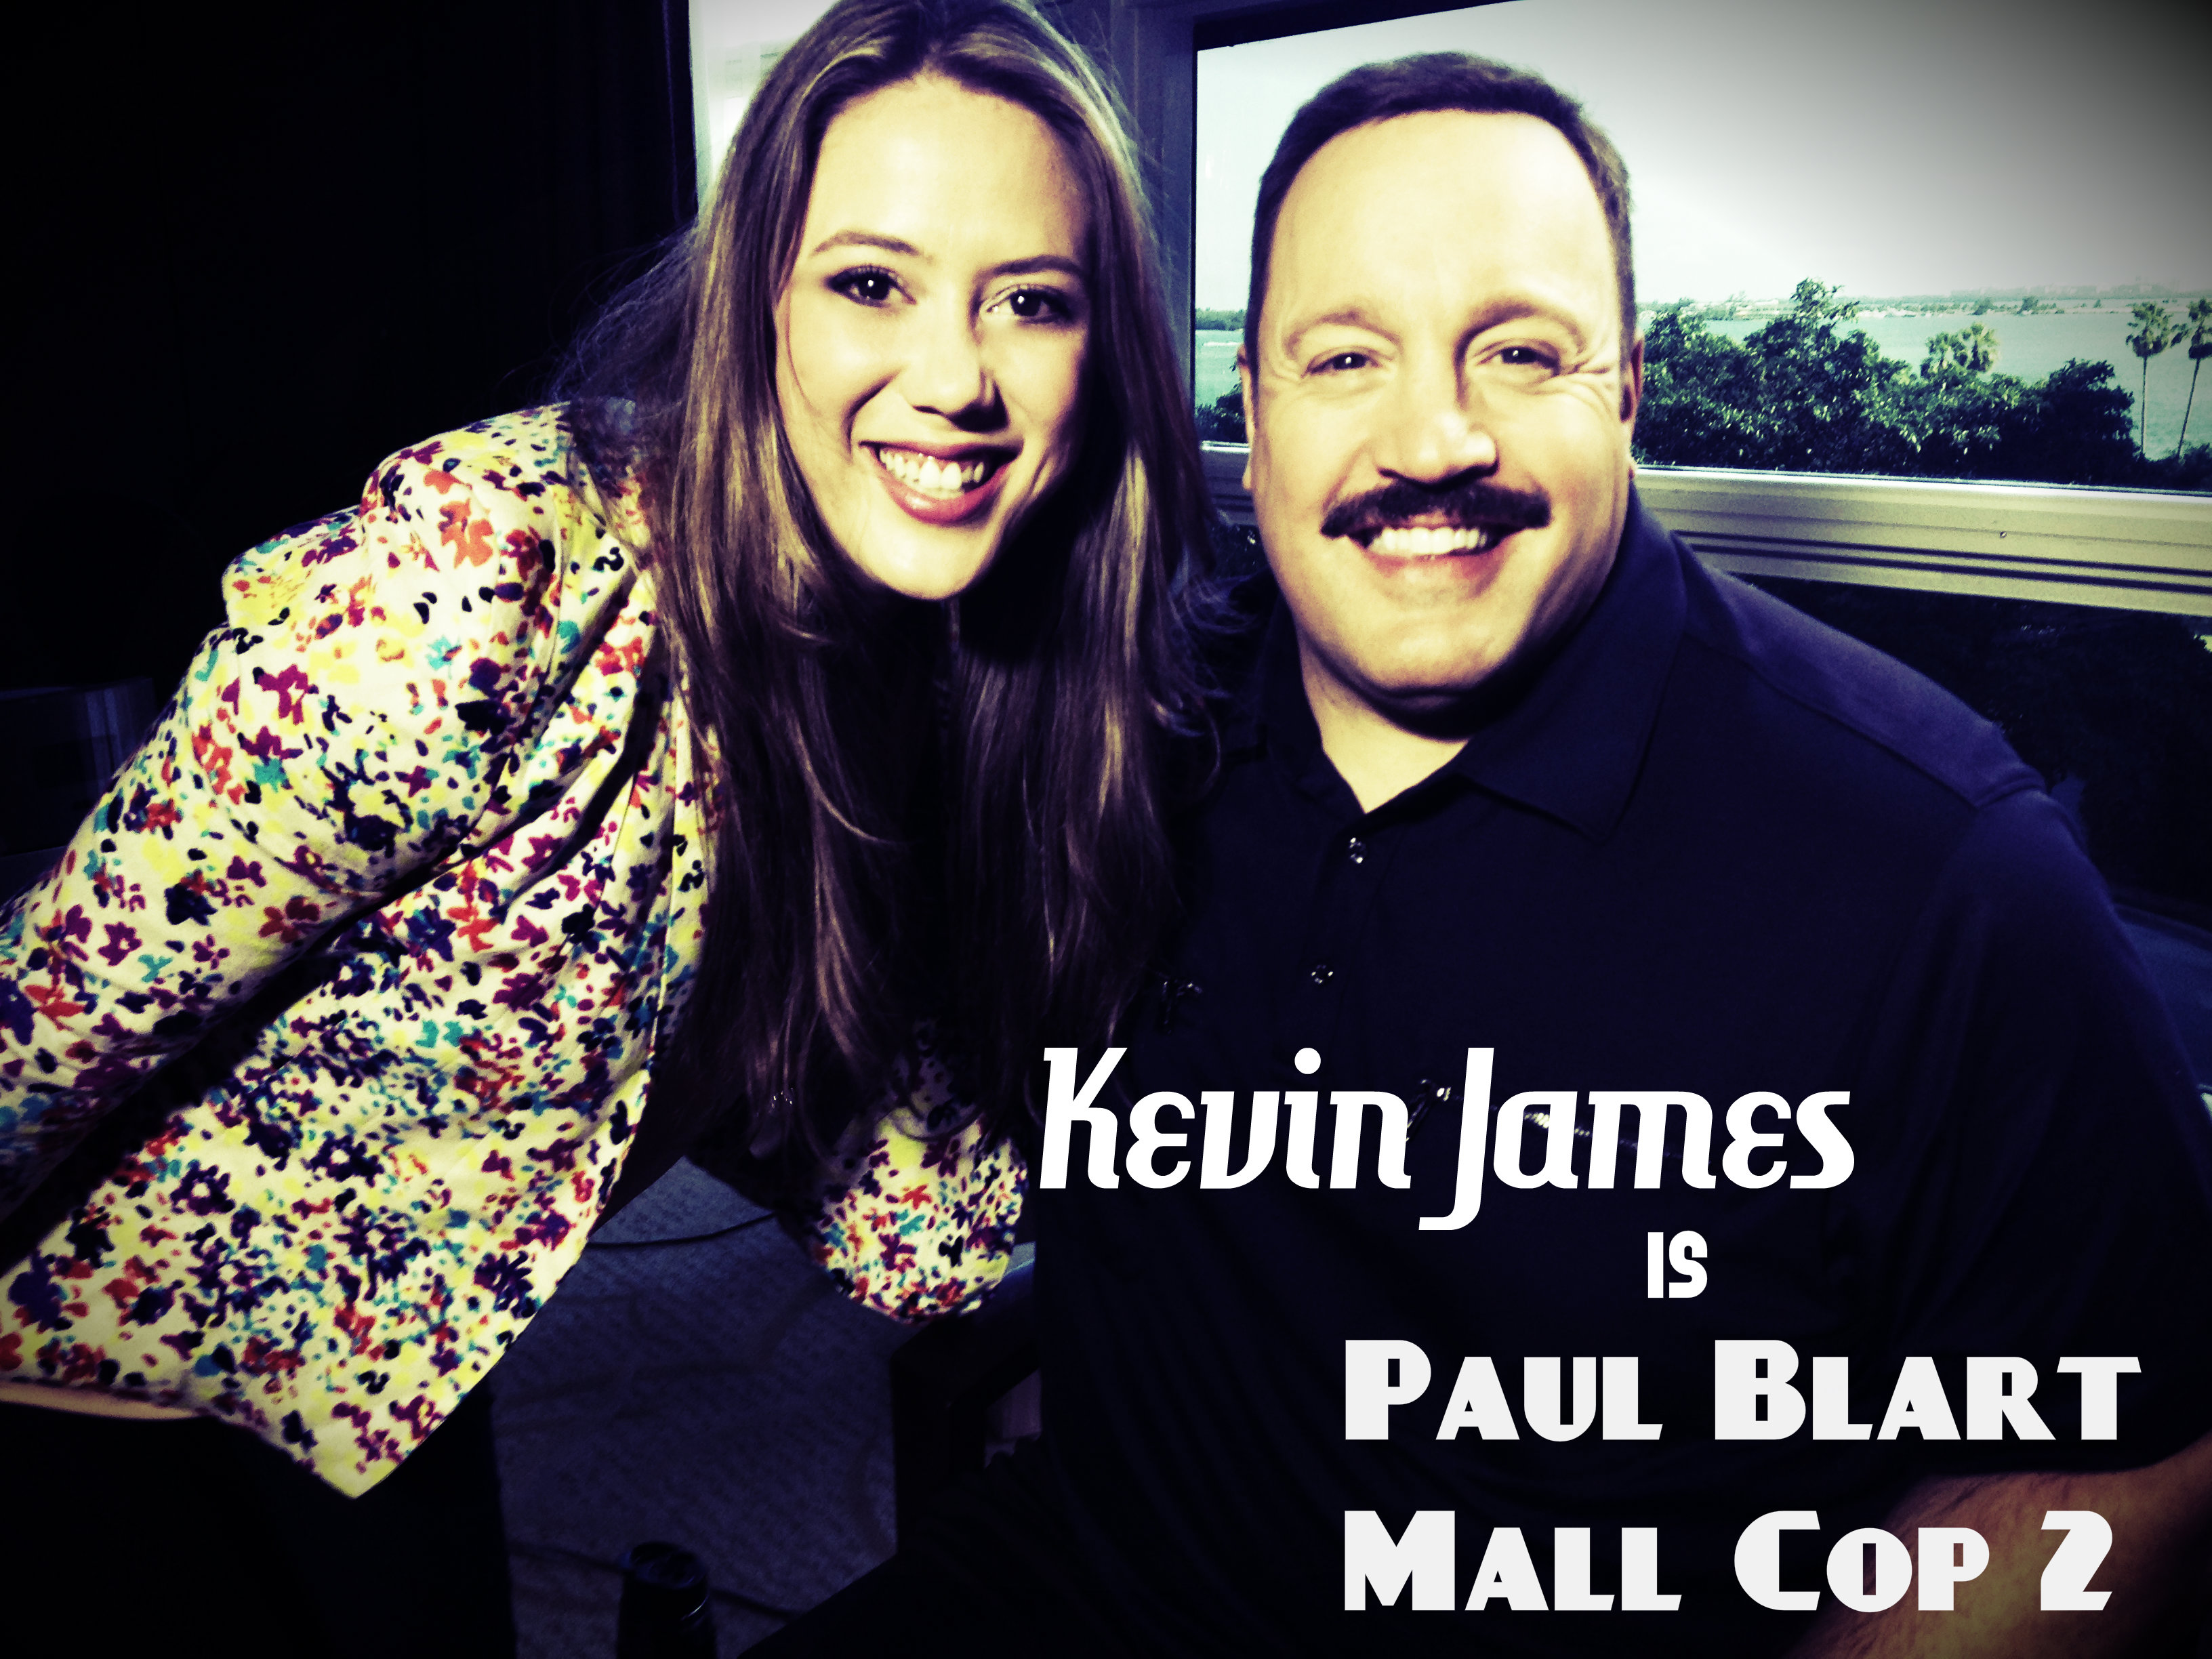 Kevin James talks to Meli Hernandez de Paul Blart Mall Cop 2